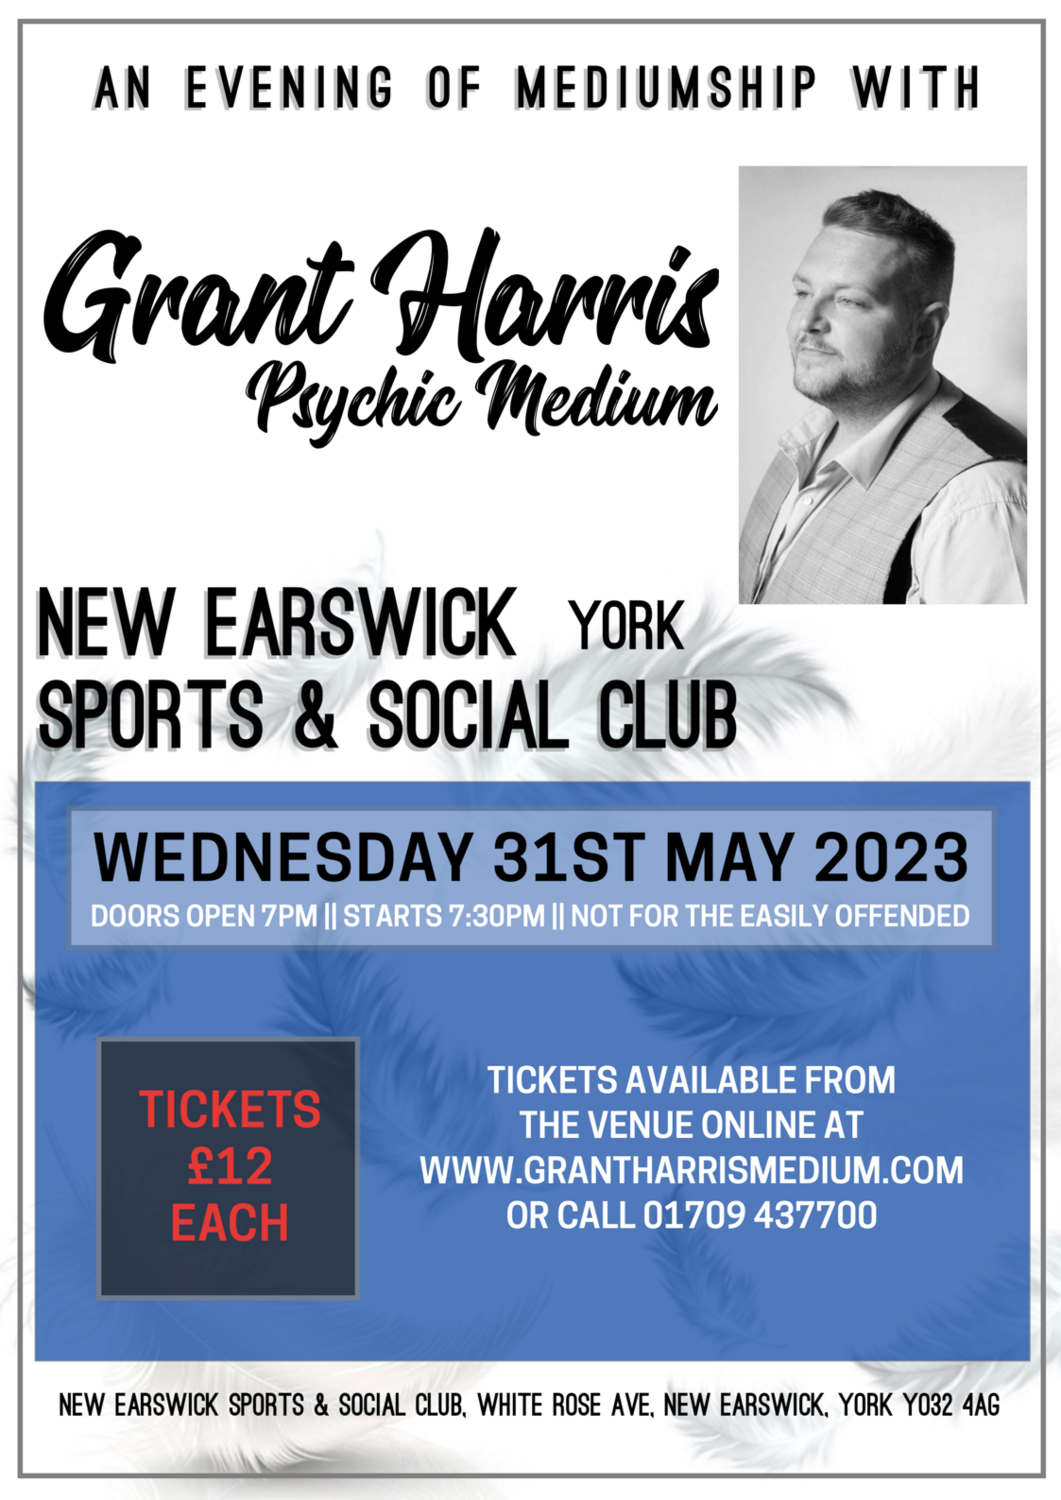 New Earswick Sports & Social Club, York, Wednesday 31st May 2023